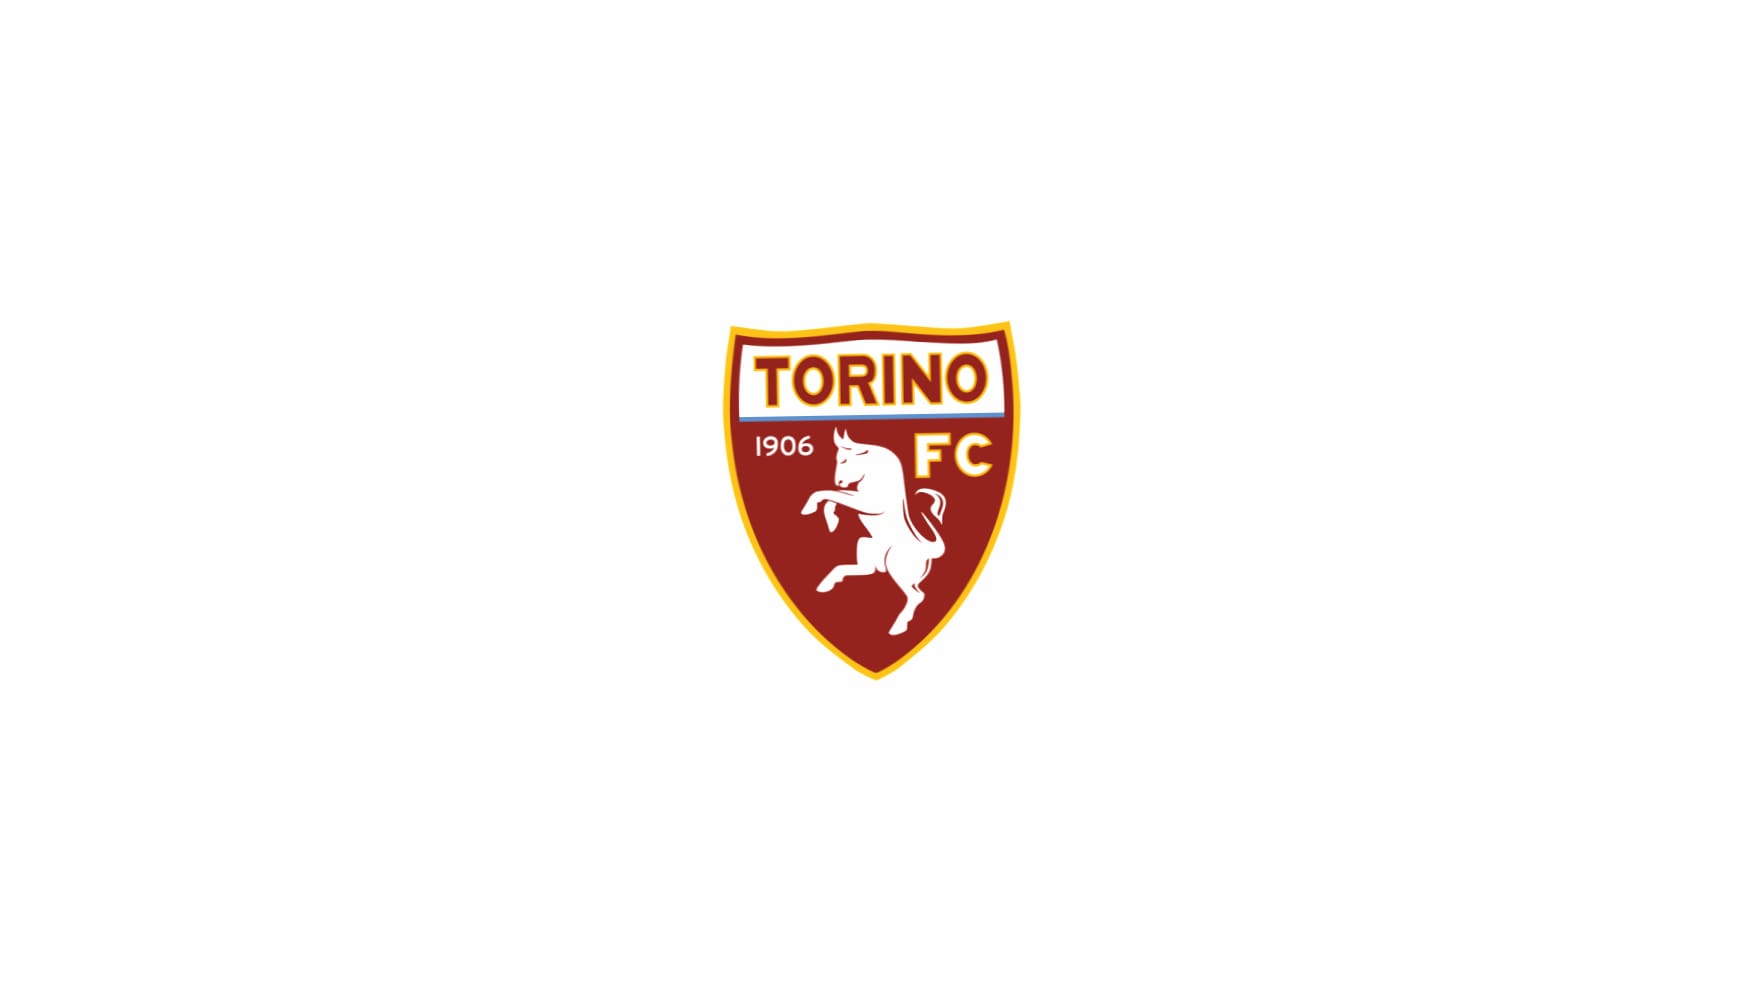 Torino F.C at 1024 x 1024 iPad size wallpapers HD quality